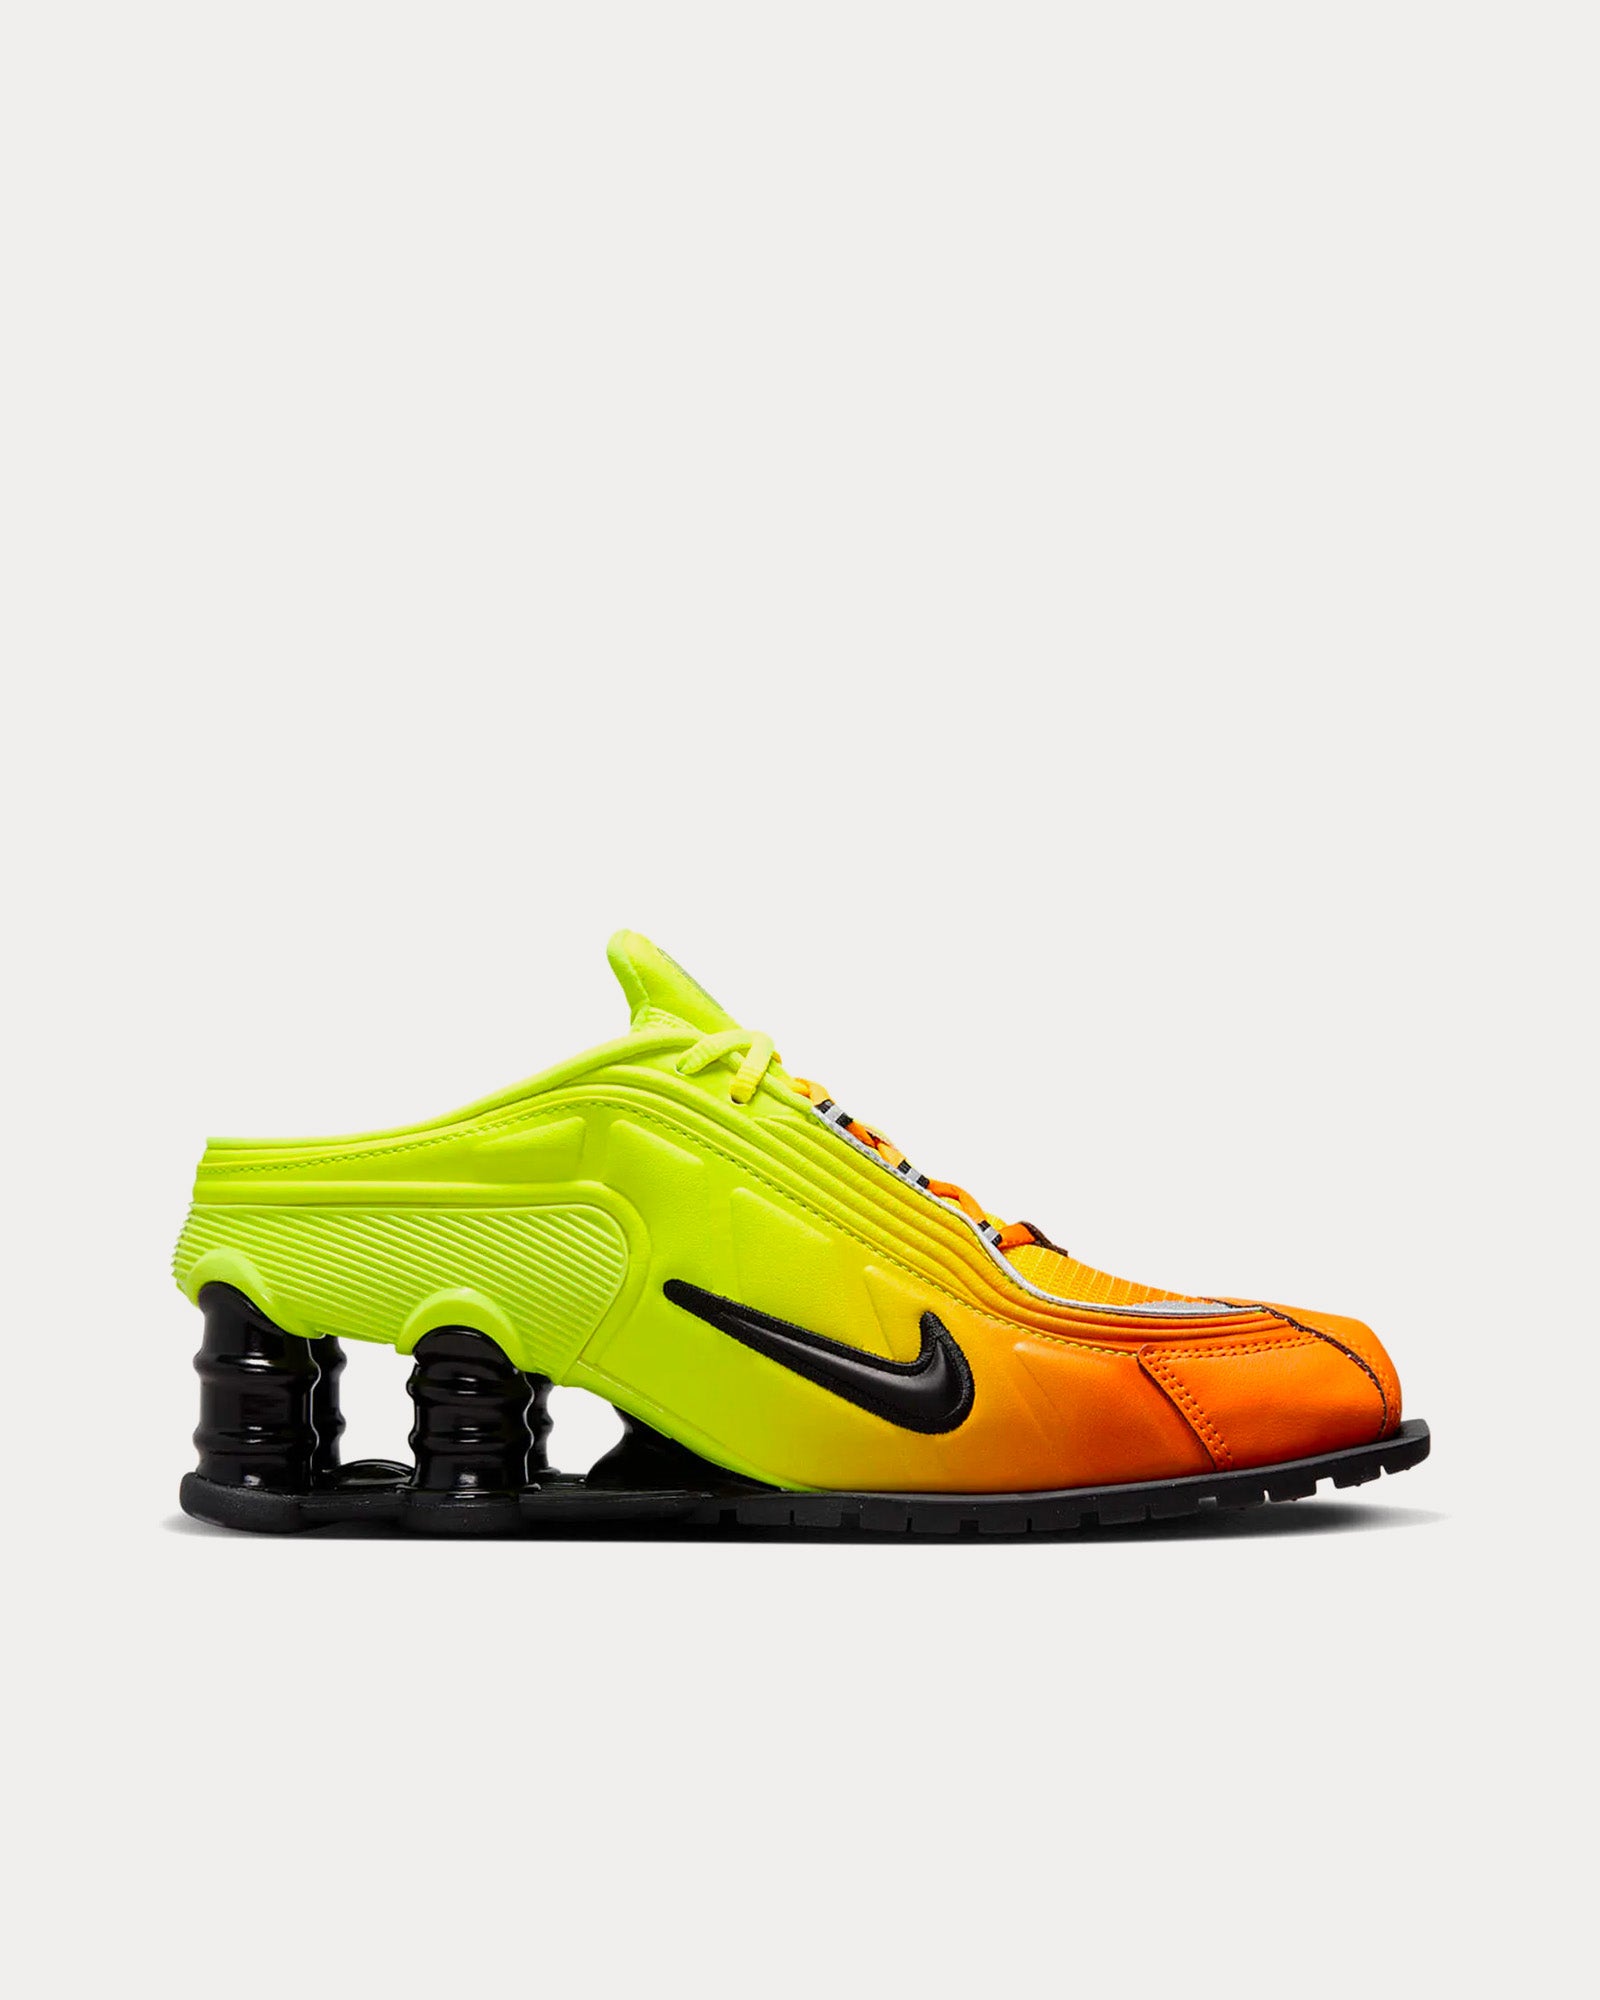 Nike x Martine Rose - Shox MR4 Safety Orange Low Top Sneakers